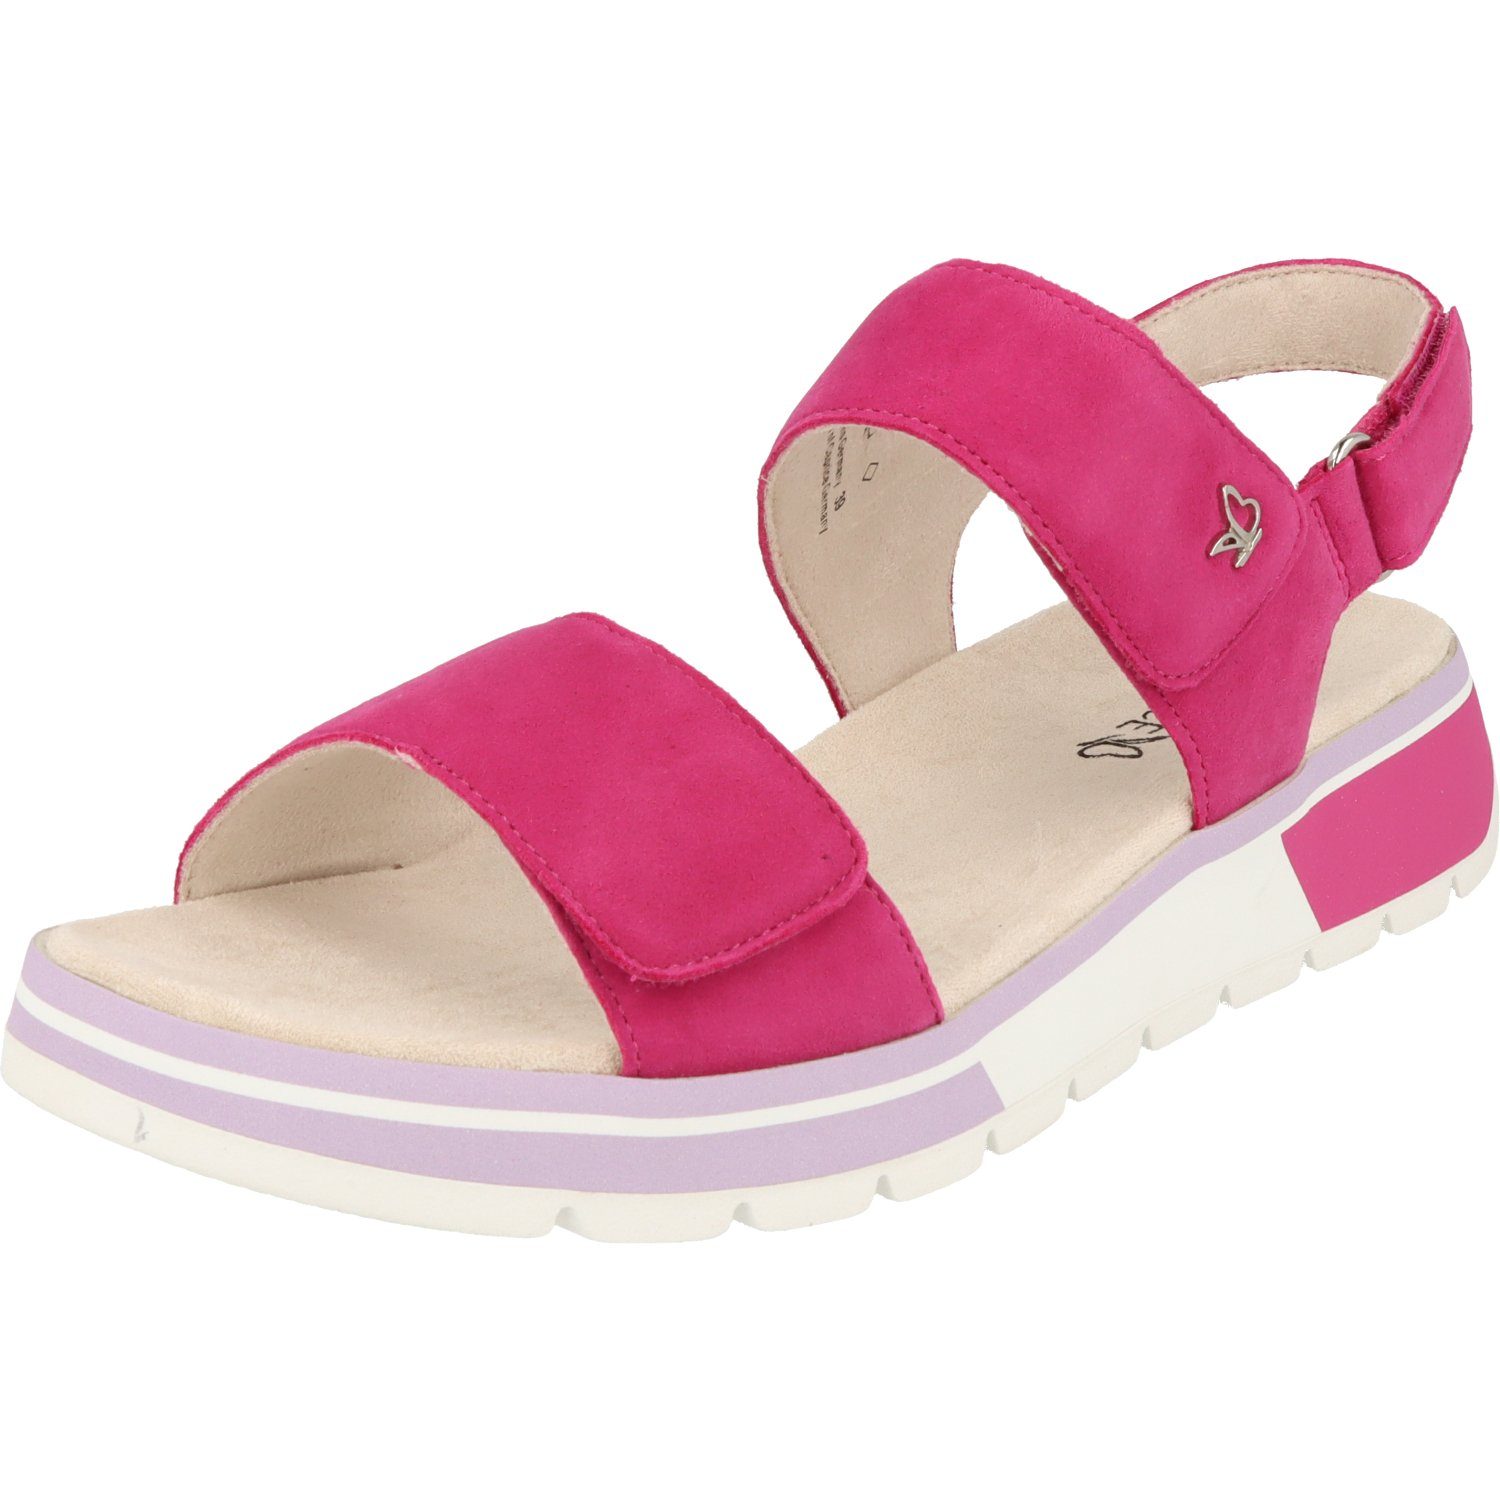 Caprice Damen Schuhe Climotion Klett Sandalette mit Fuchsia 9-28705-20 Komfort